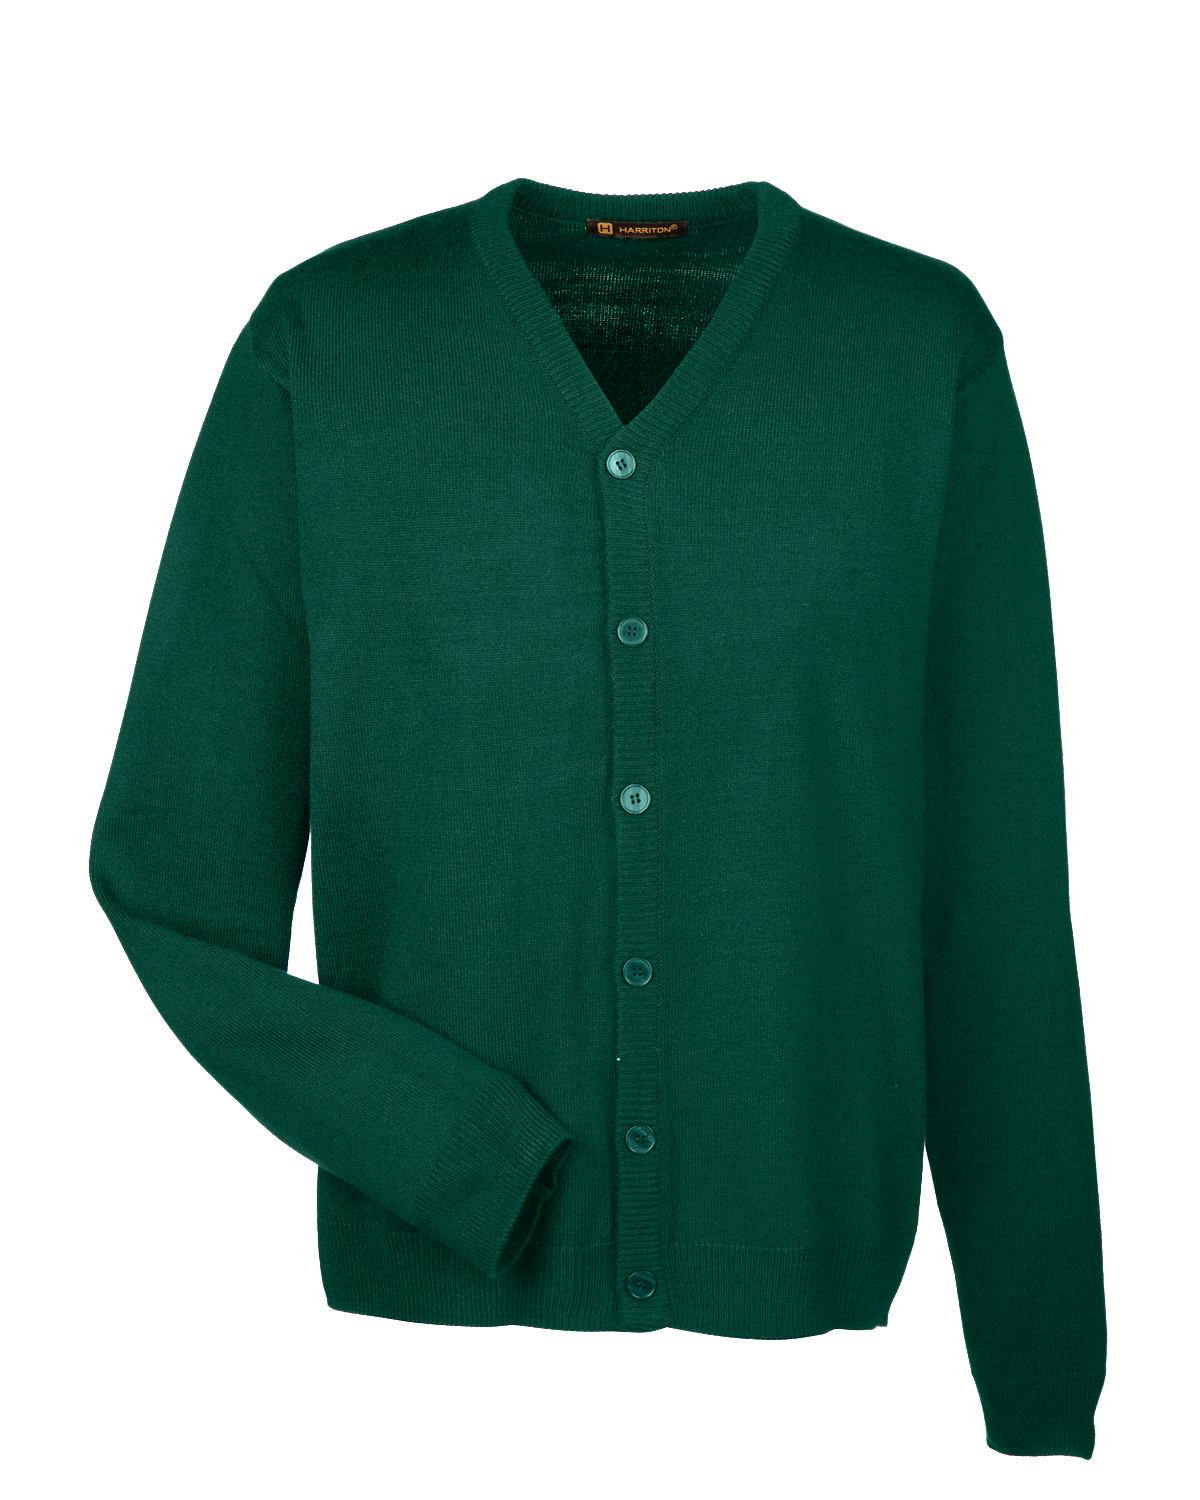 Image for Men's Pilbloc™ V-Neck Button Cardigan Sweater